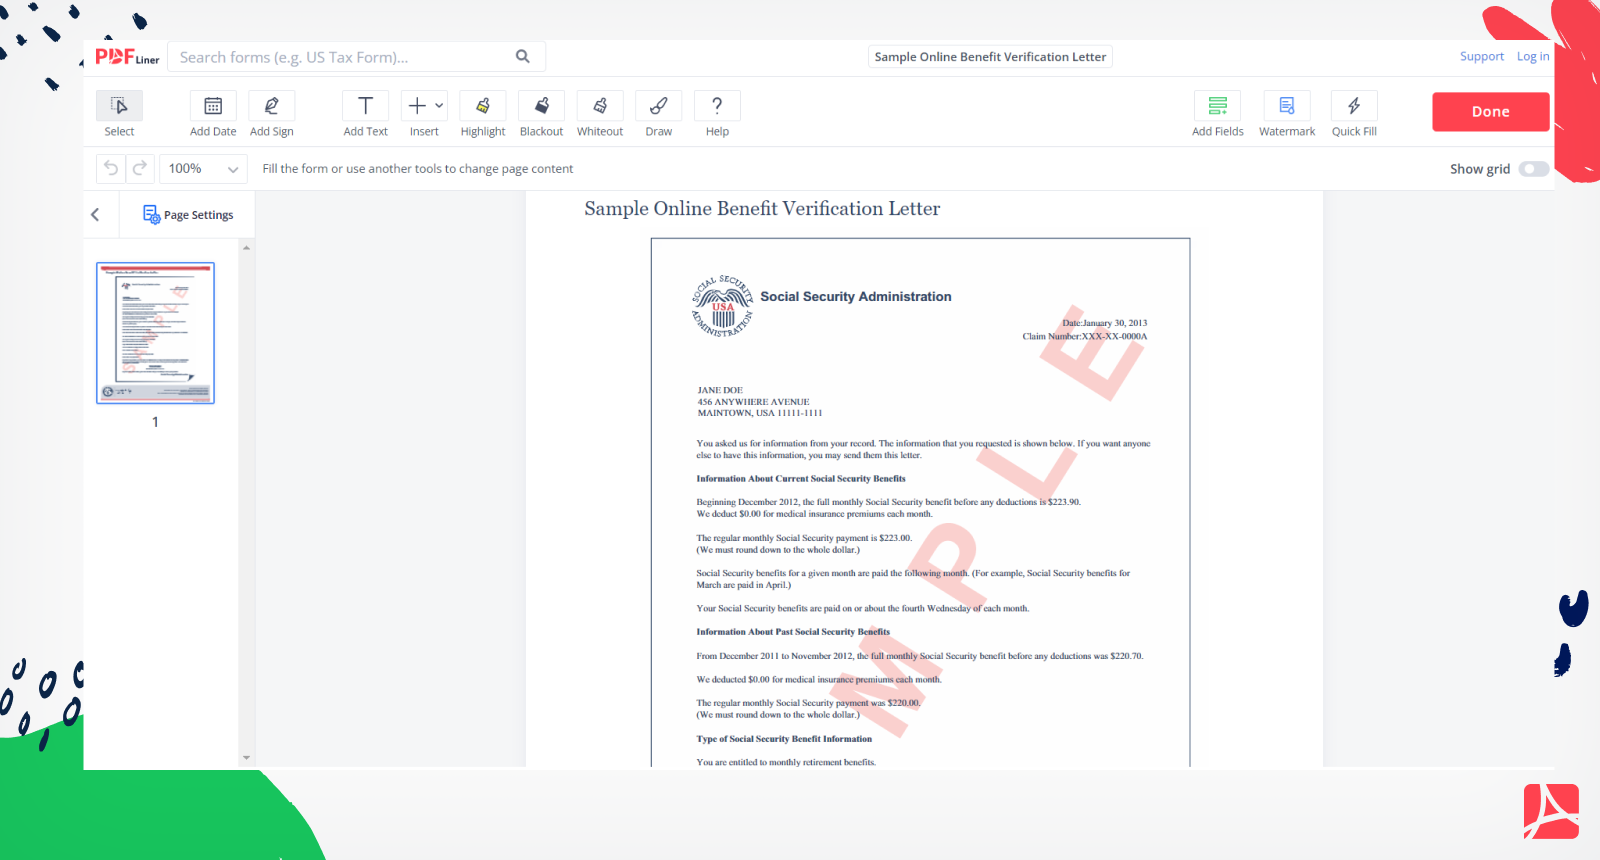 Sample Online Benefit Verification Letter Screenshot